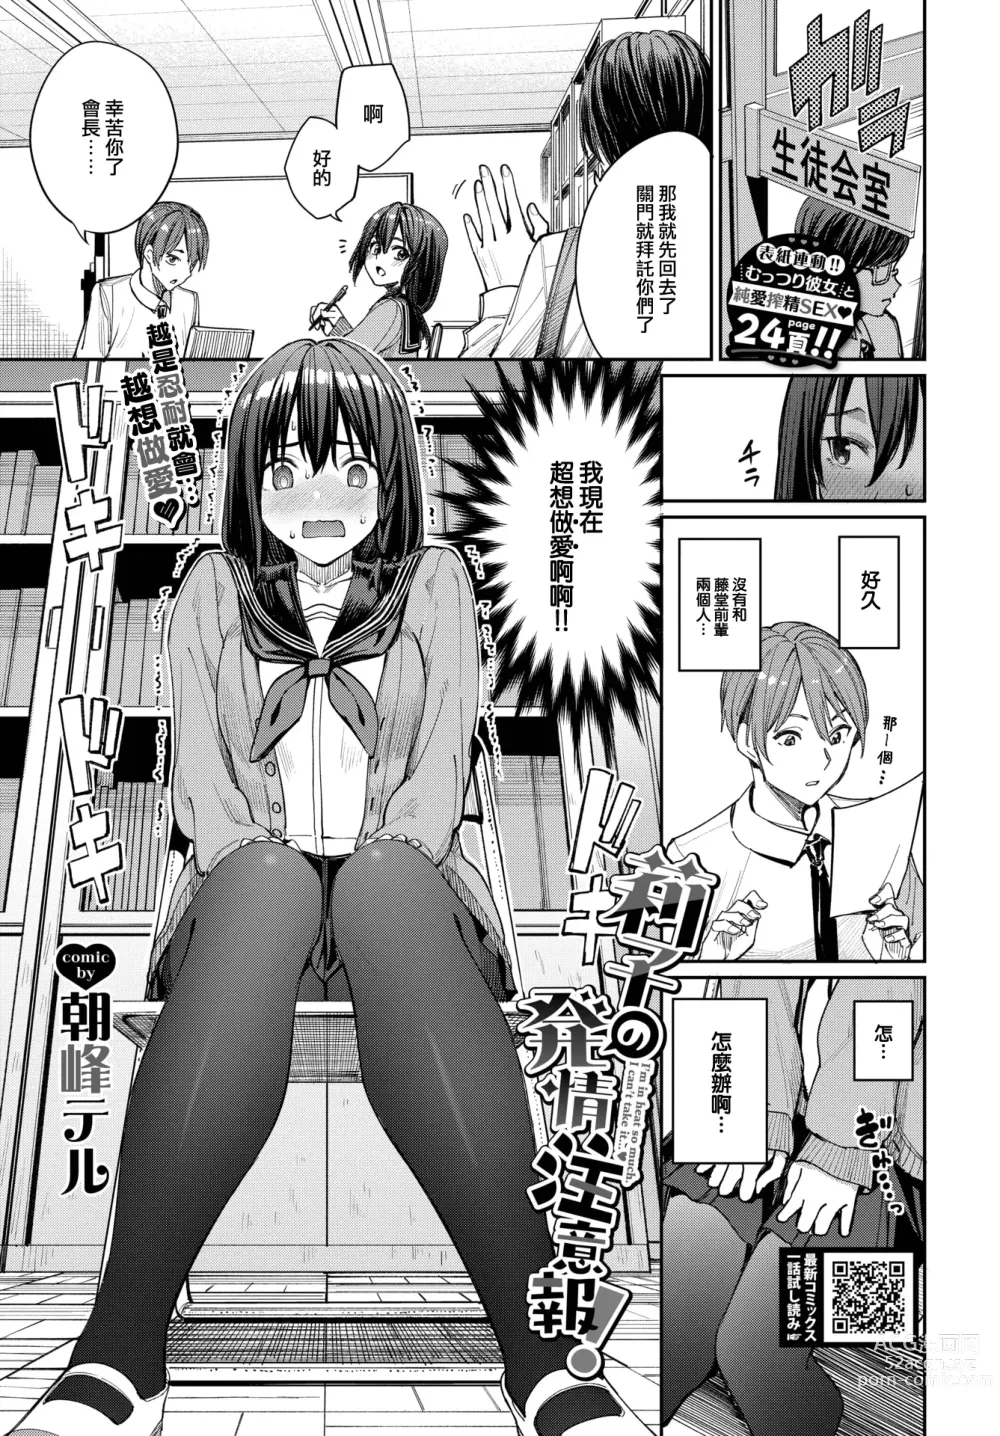 Page 3 of manga Riko no Hatsujou Chuuihou! - Im in heat so much. I can't take it...